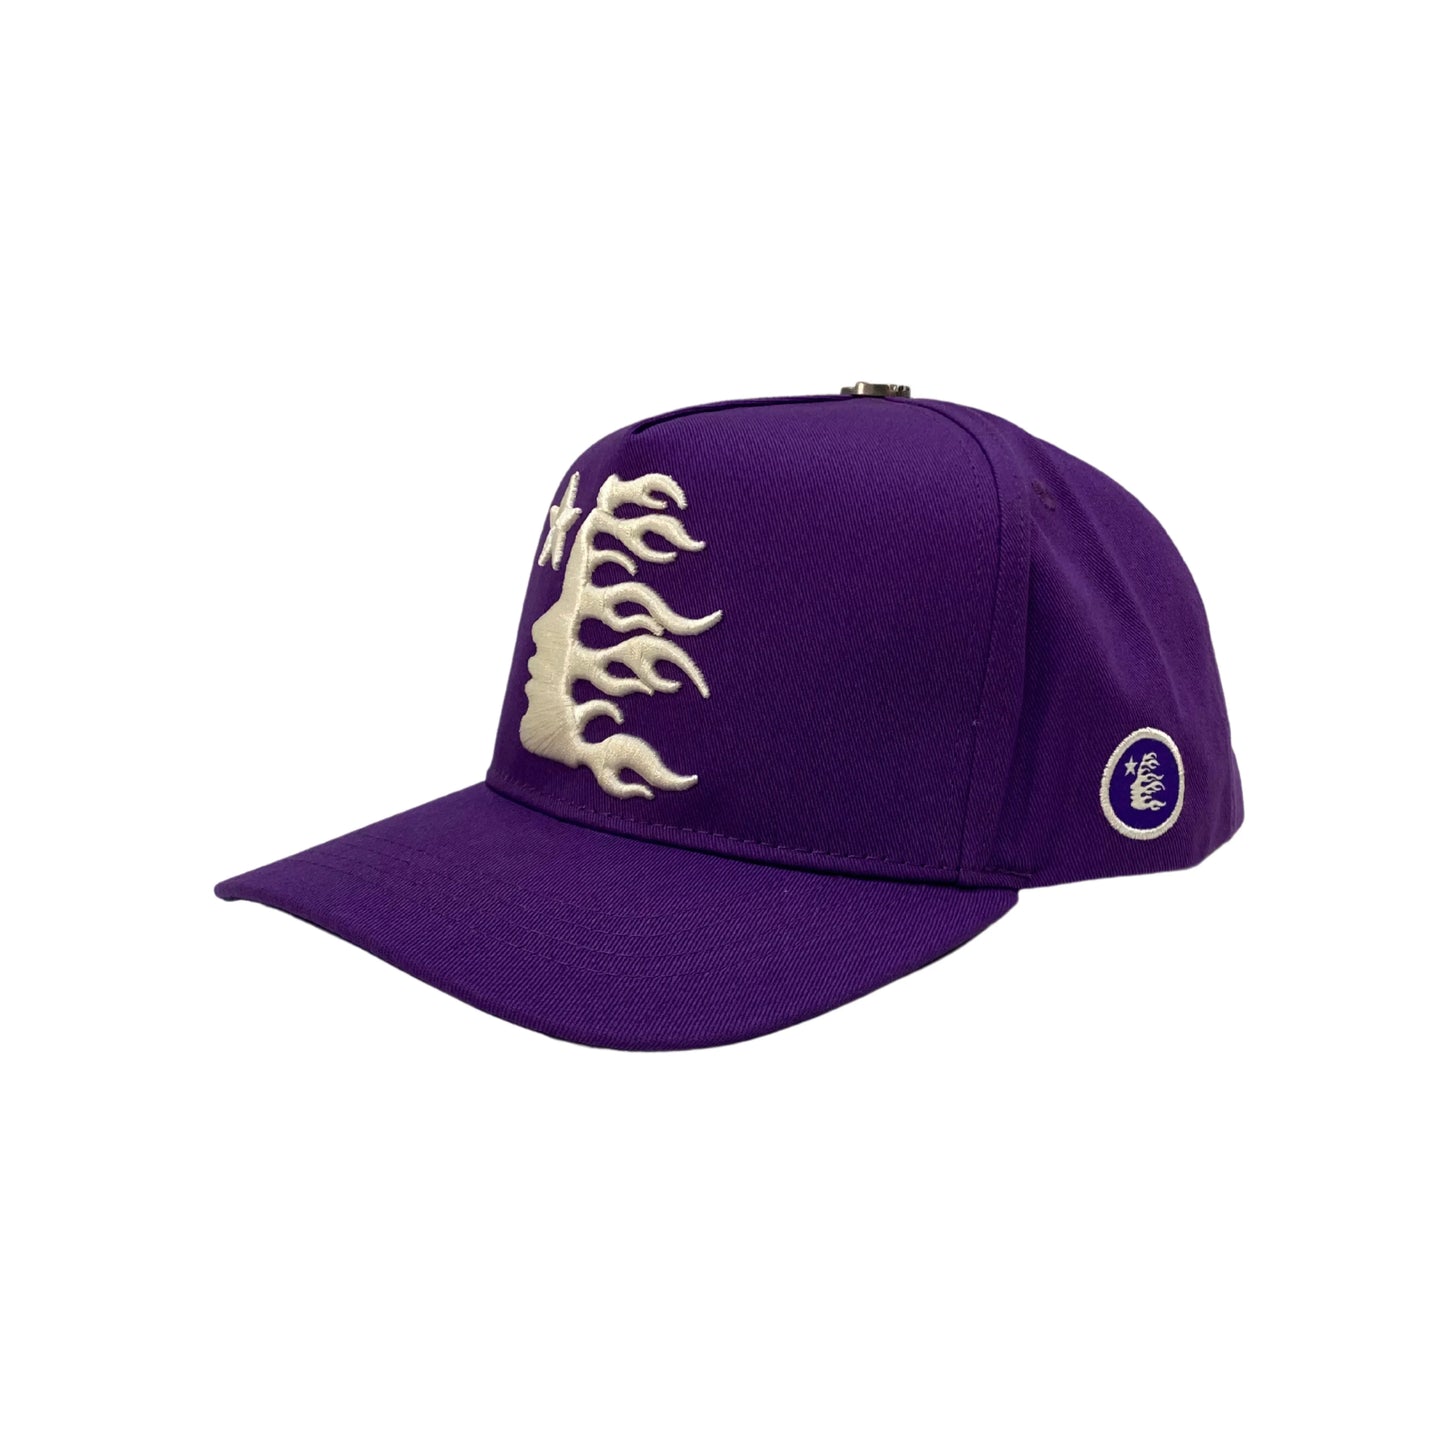 Hellstar Purple White Snapback Hat Side View